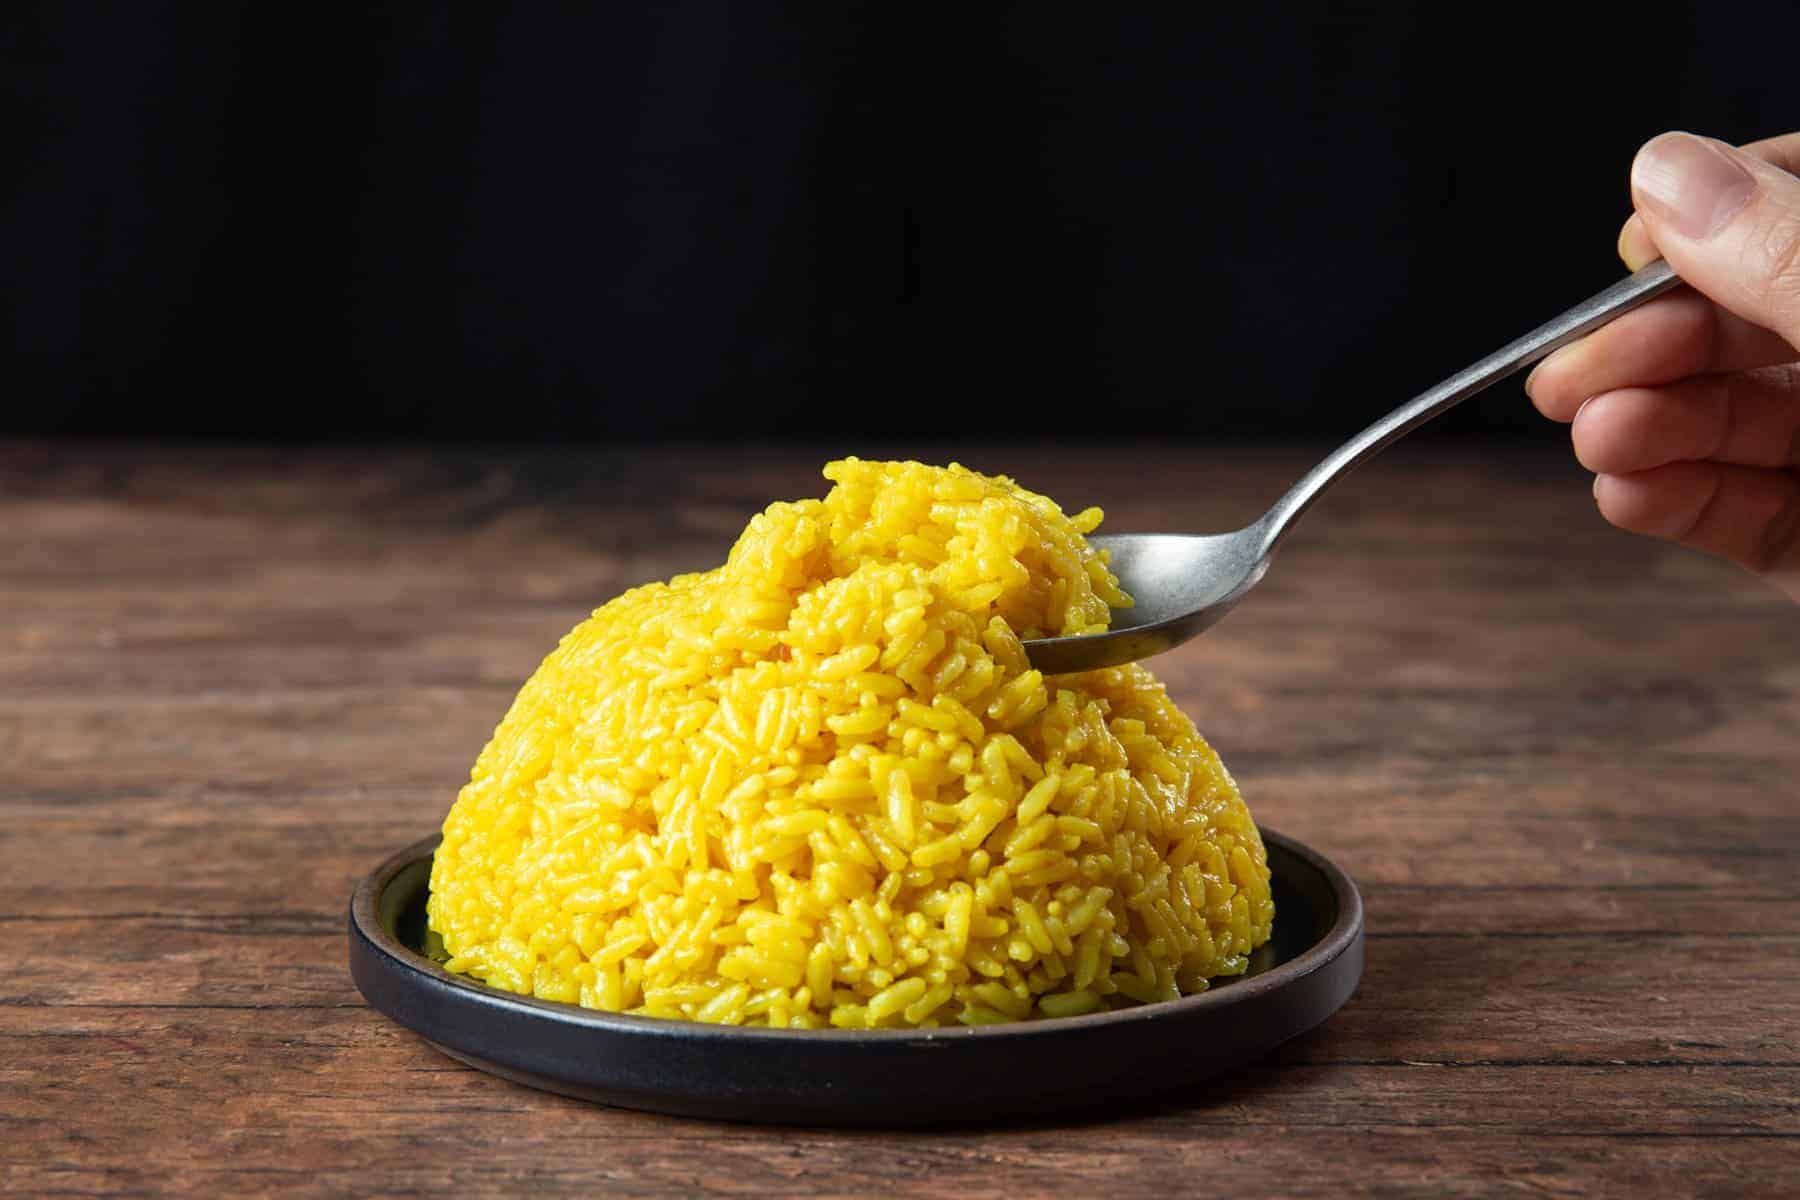 https://www.pressurecookrecipes.com/wp-content/uploads/2020/08/instant-pot-yellow-rice.jpg